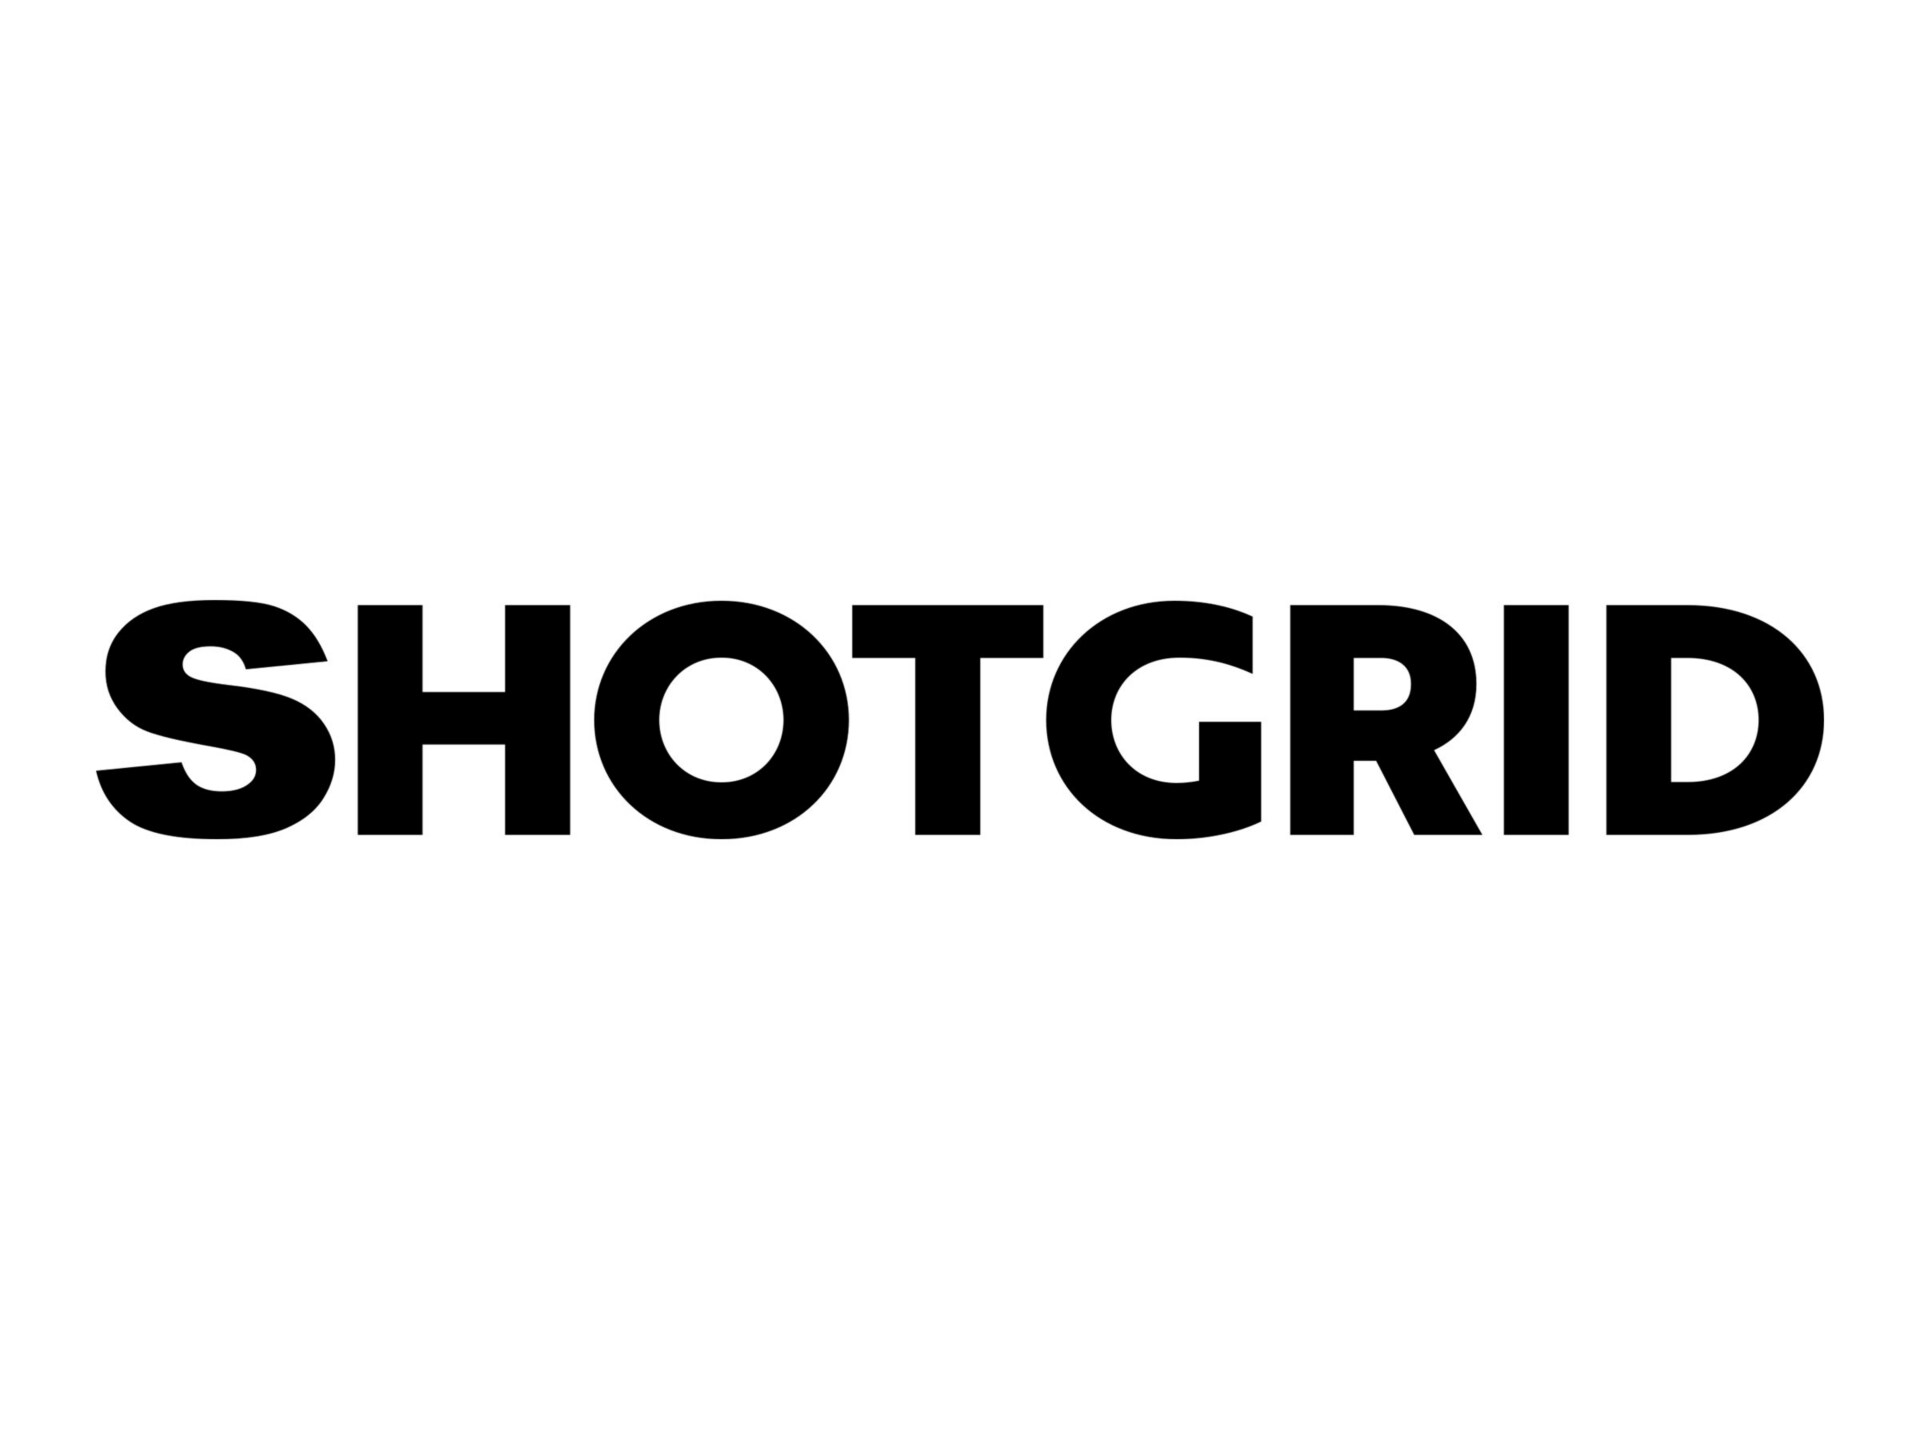 Autodesk ShotGrid - New Subscription (32 months) - 1 seat